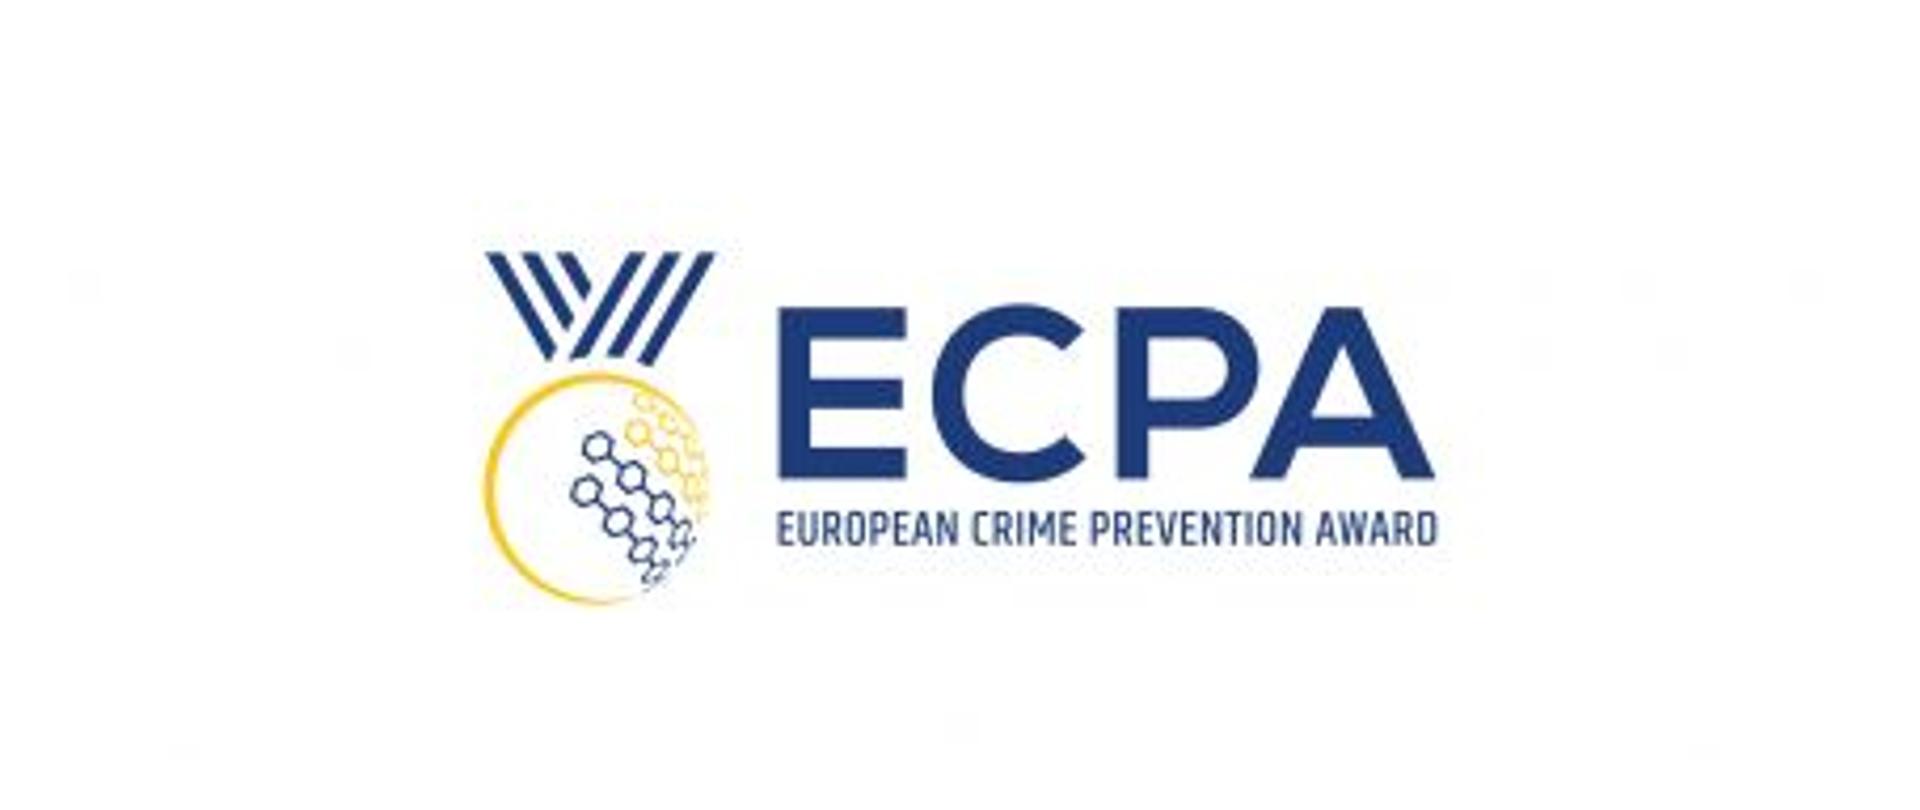 European Crime Prevention Award